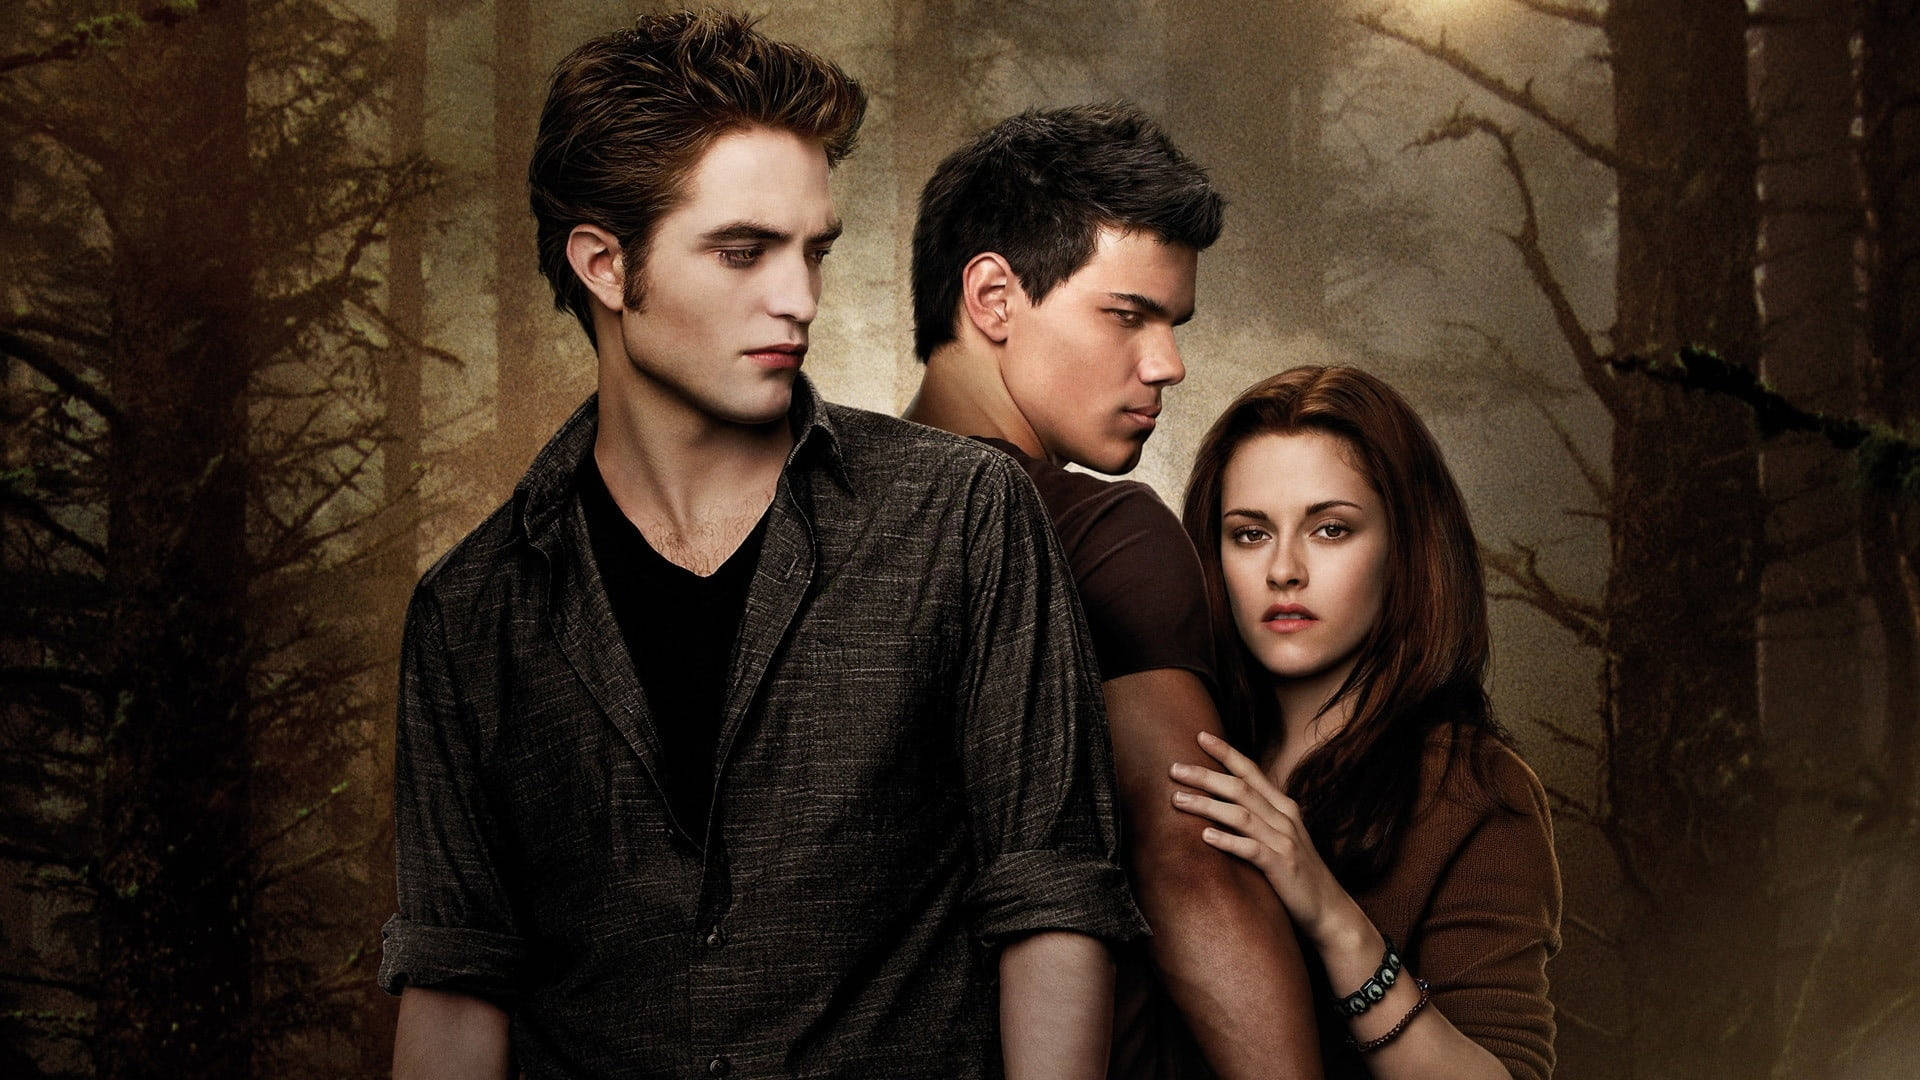 Mesmerizing Trio From The Twilight Saga: New Moon - Bella, Jacob, And Edward Background